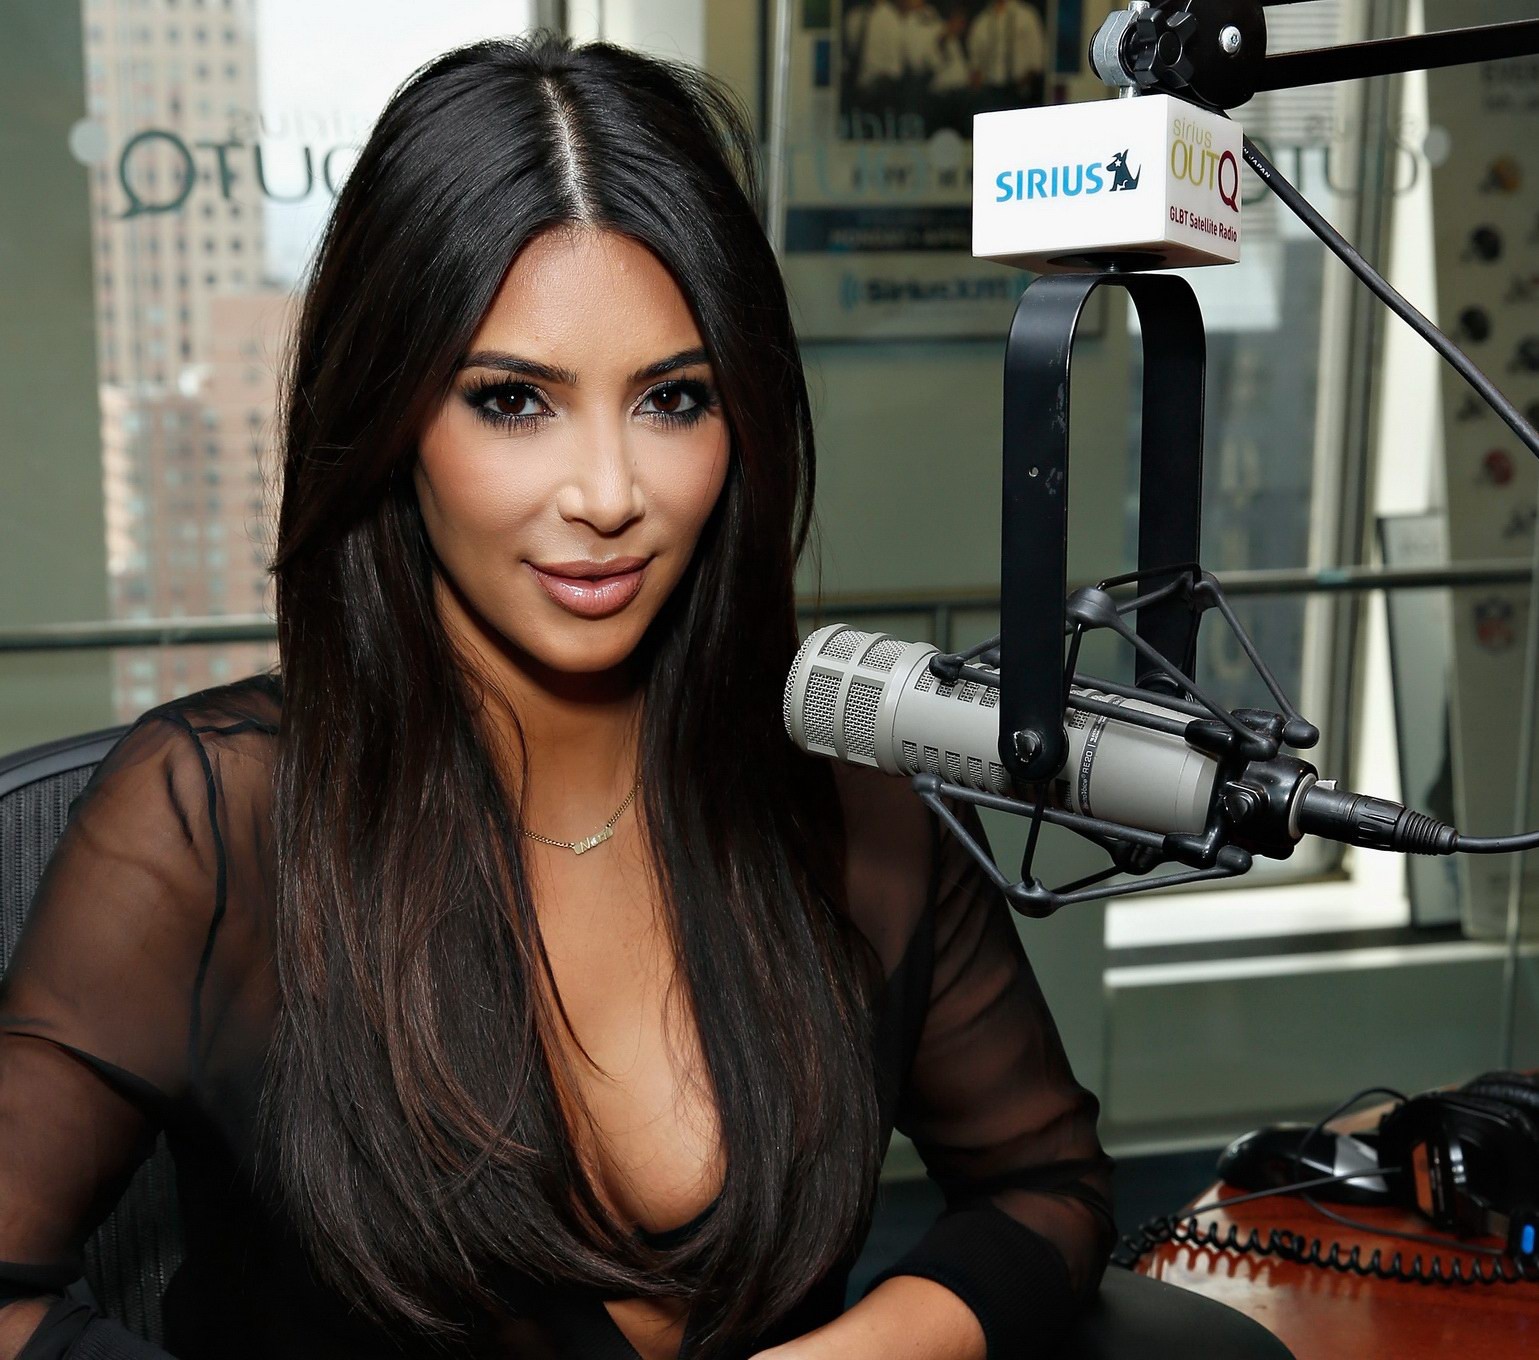 Kim Kardashian en soutien-gorge transparent aux studios Siriusxm à New York.
 #75188255